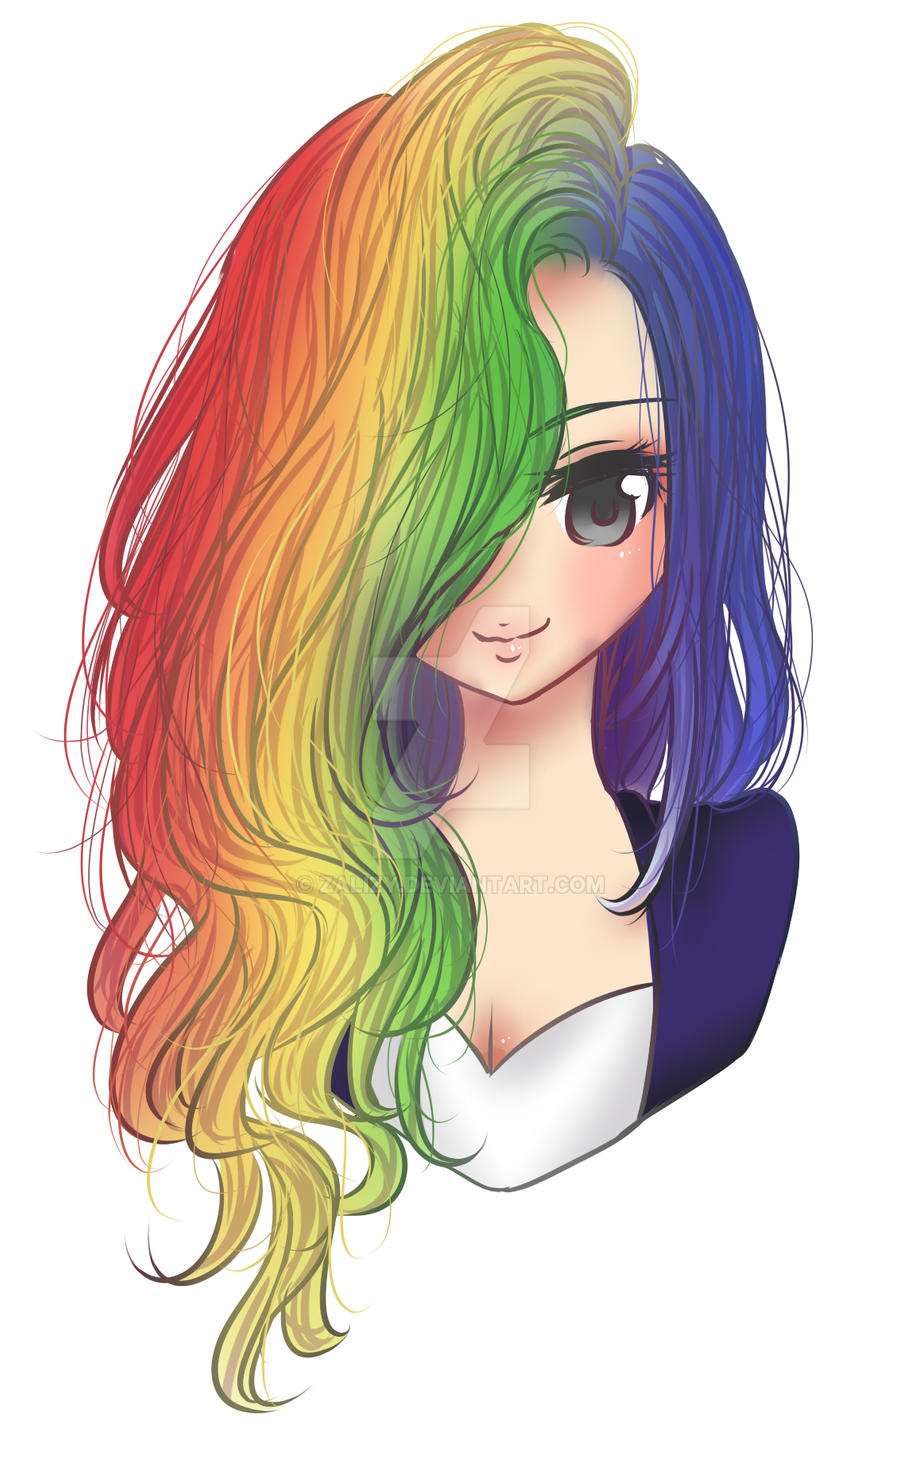 Rainbow Hair Girl by Zalizy on DeviantArt